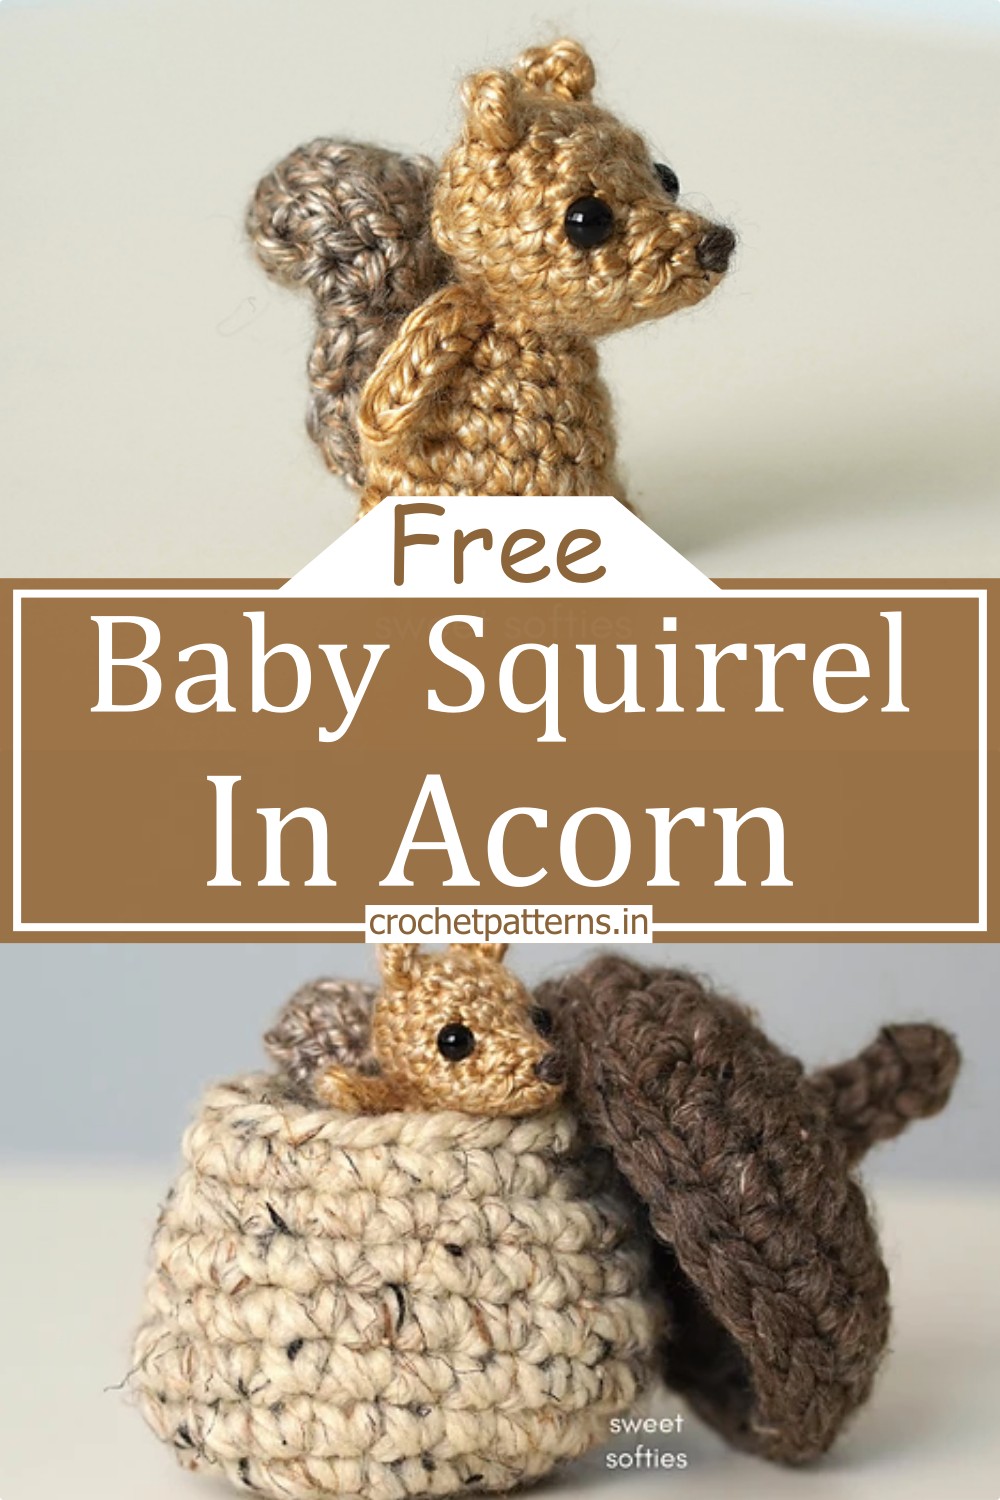 Baby Squirrel In Acorn